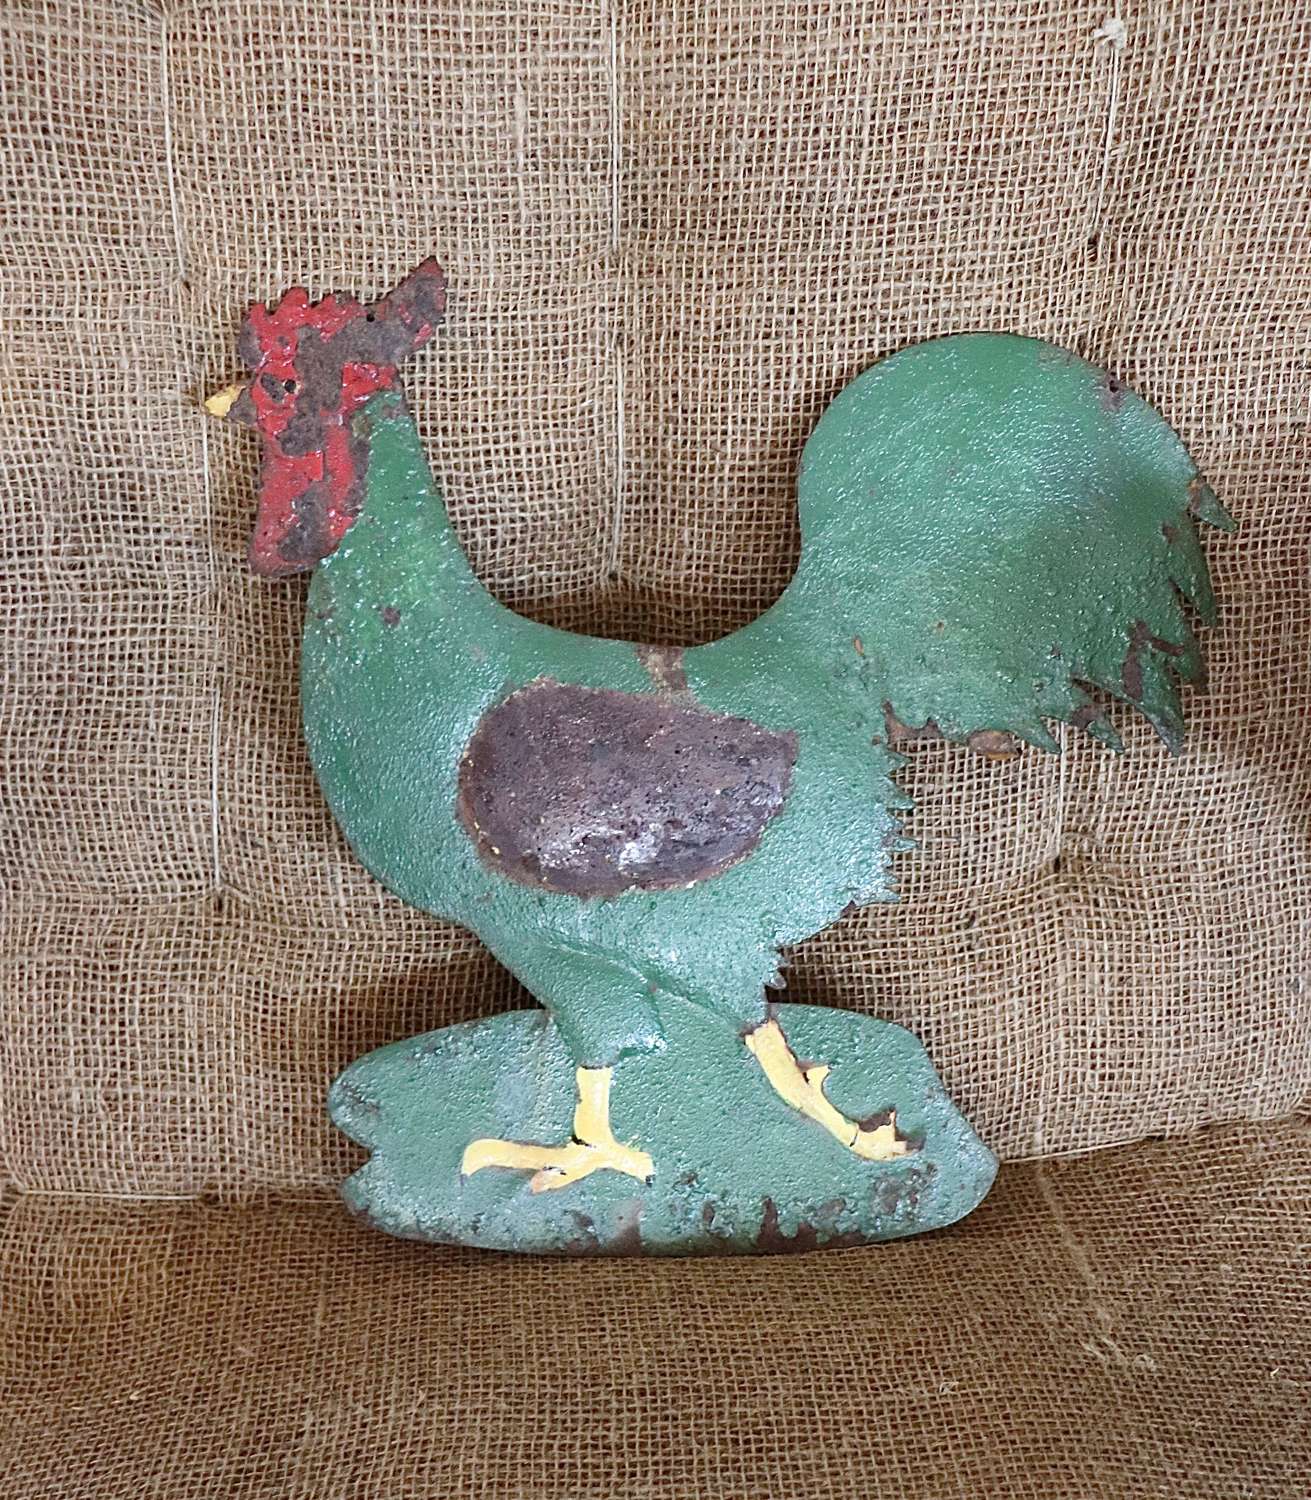 Tin painted cockerel